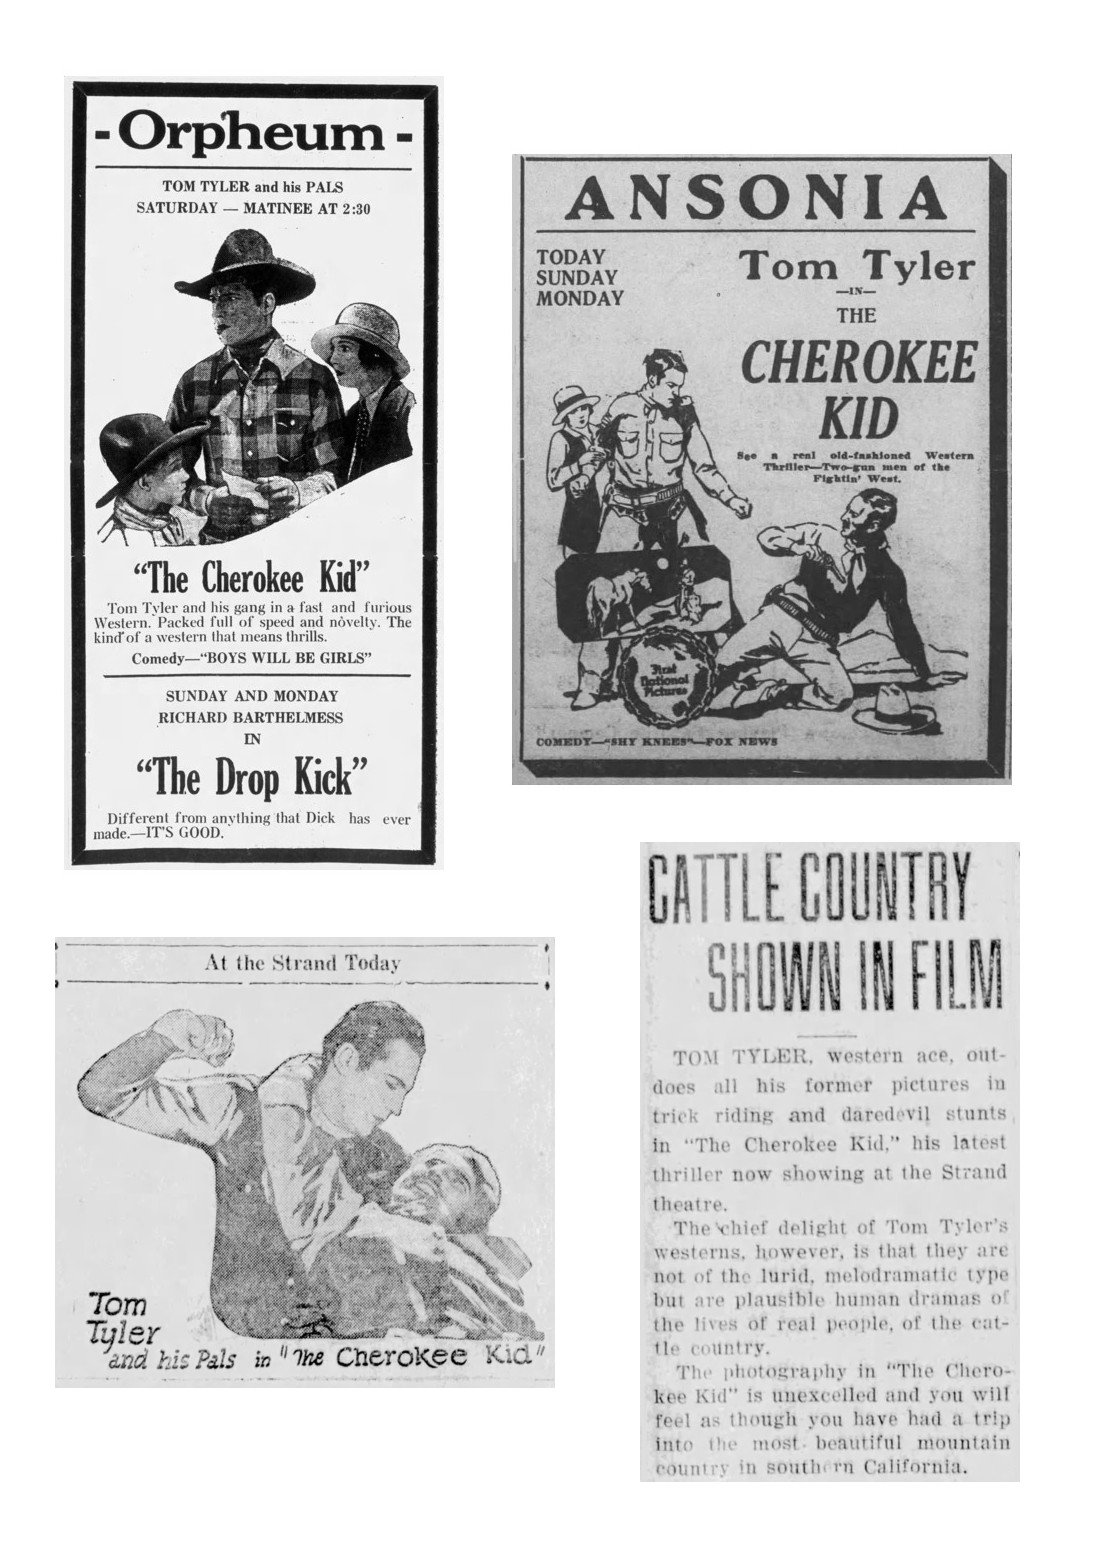 The Cherokee Kid cinema ads